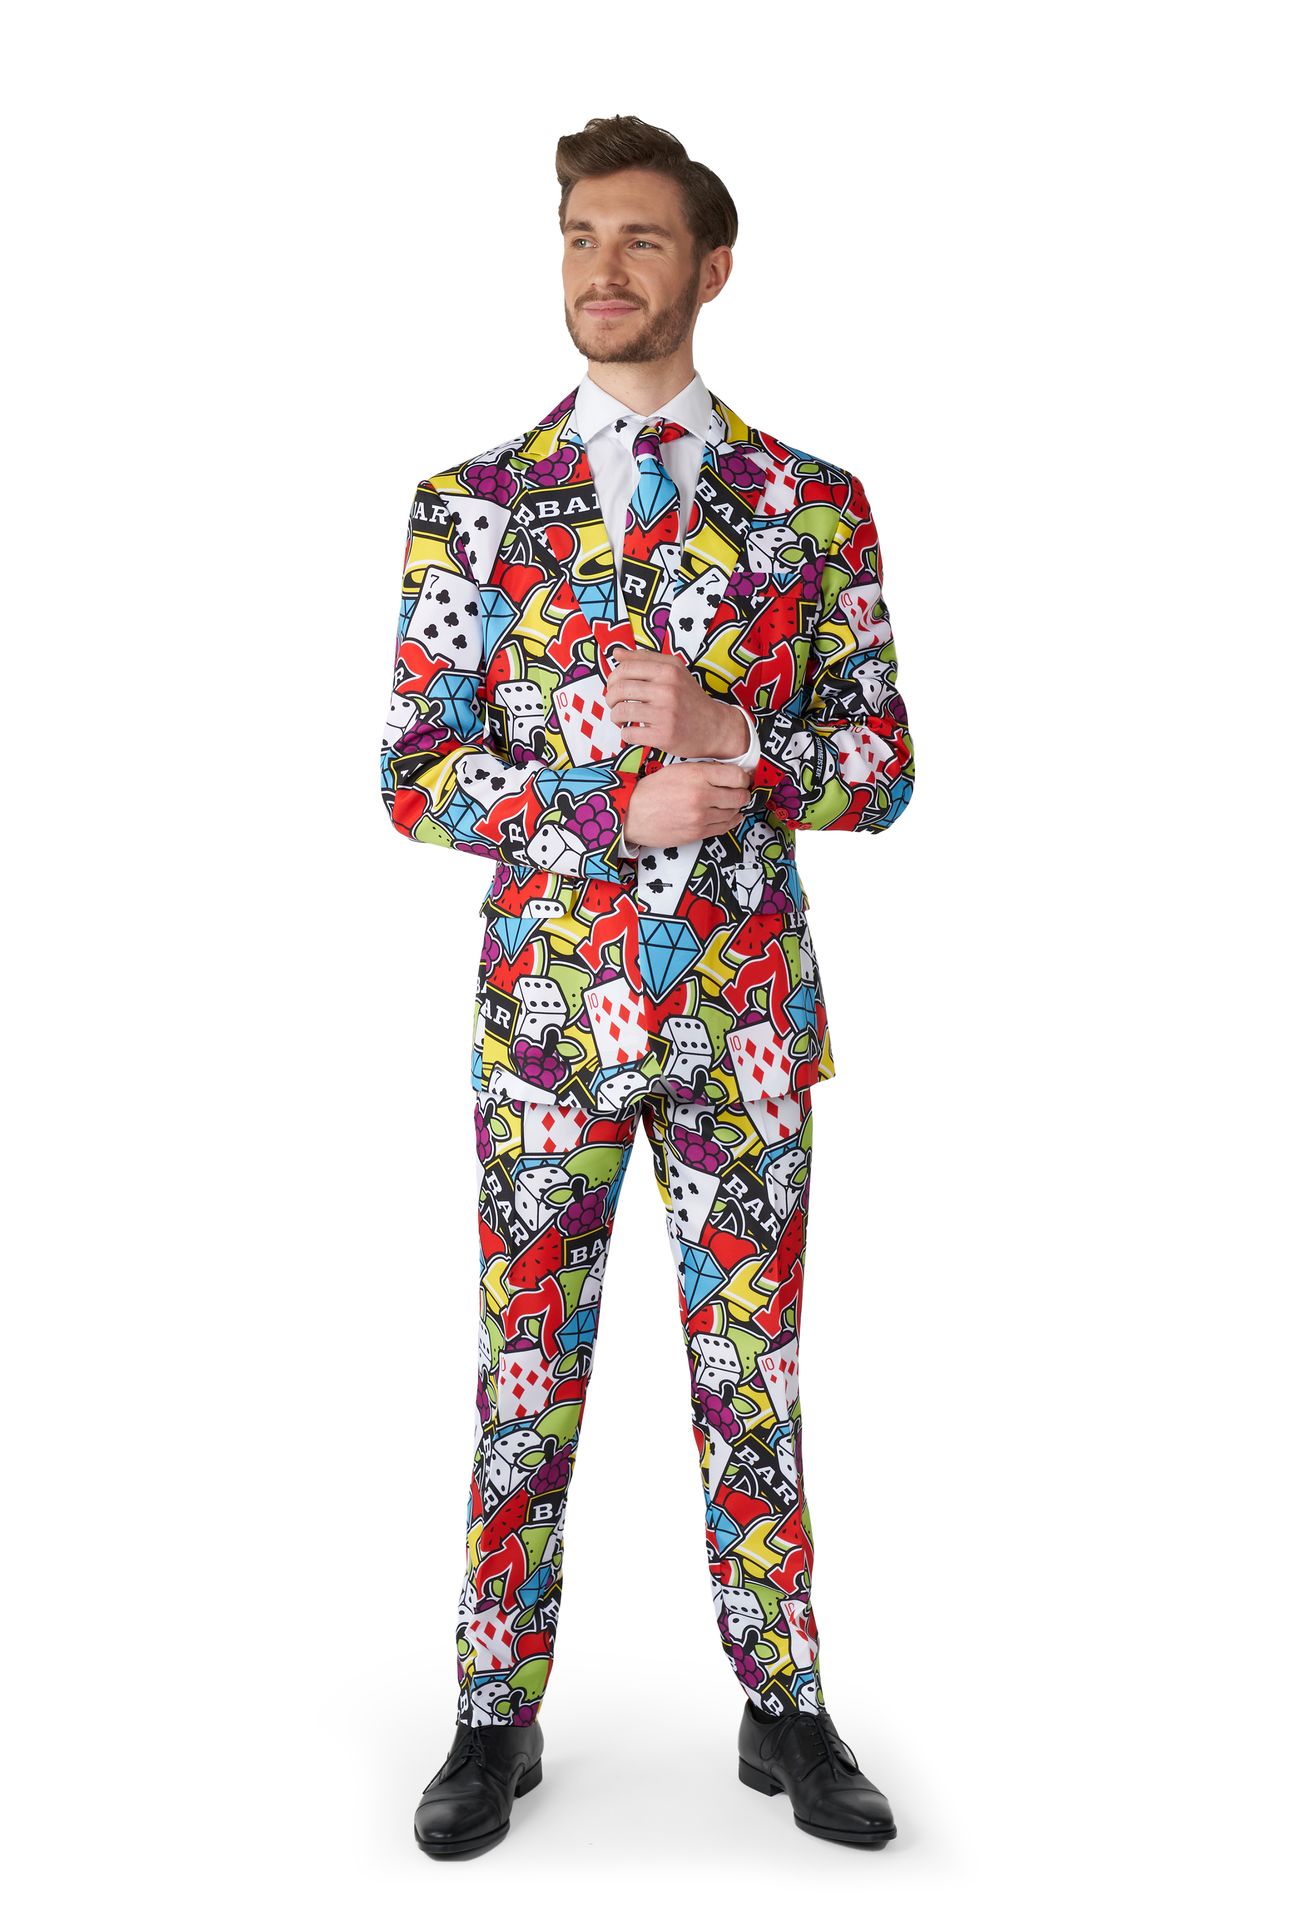 Fruitautomaat casino Suitmeister kostuum